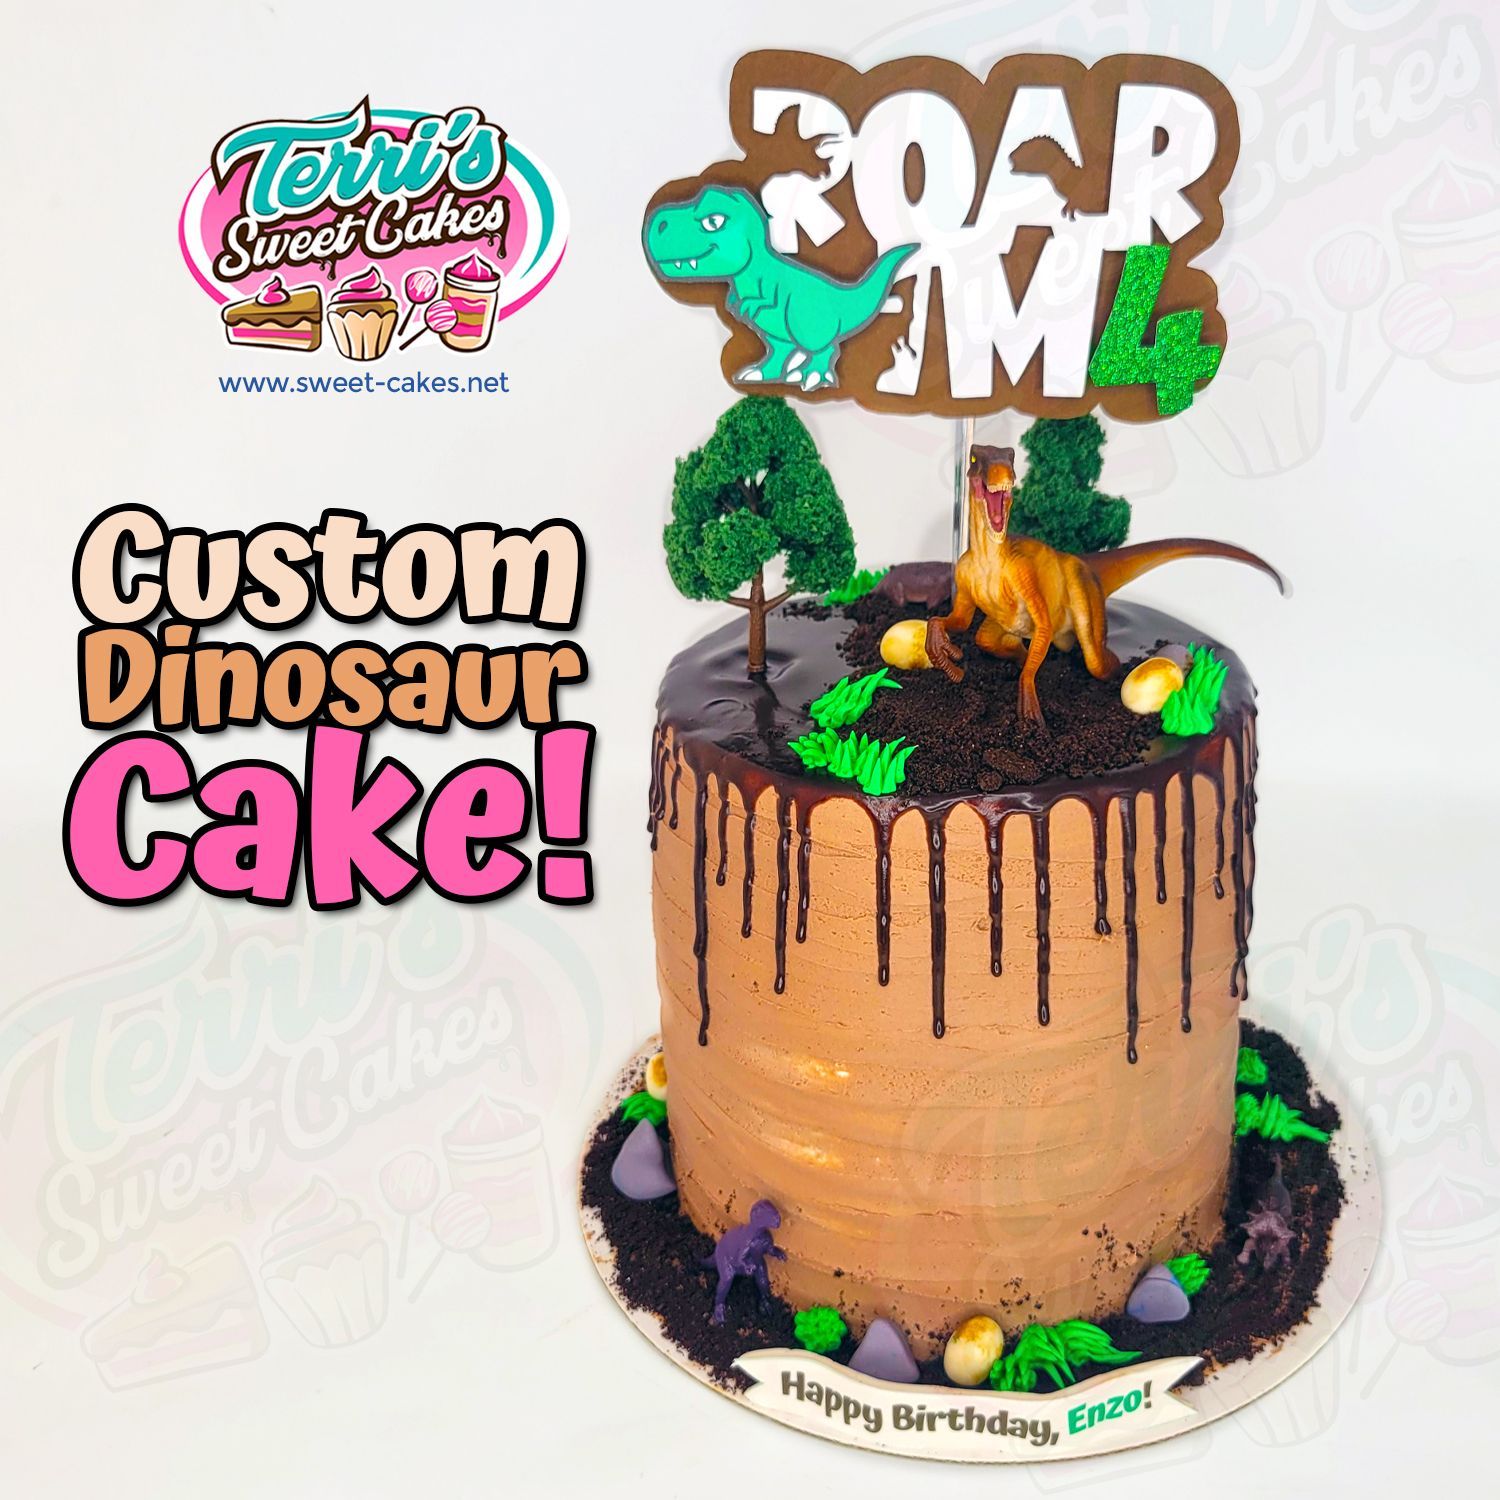 Dinosaur Birthday Cake by Terri's Sweet Cakes!